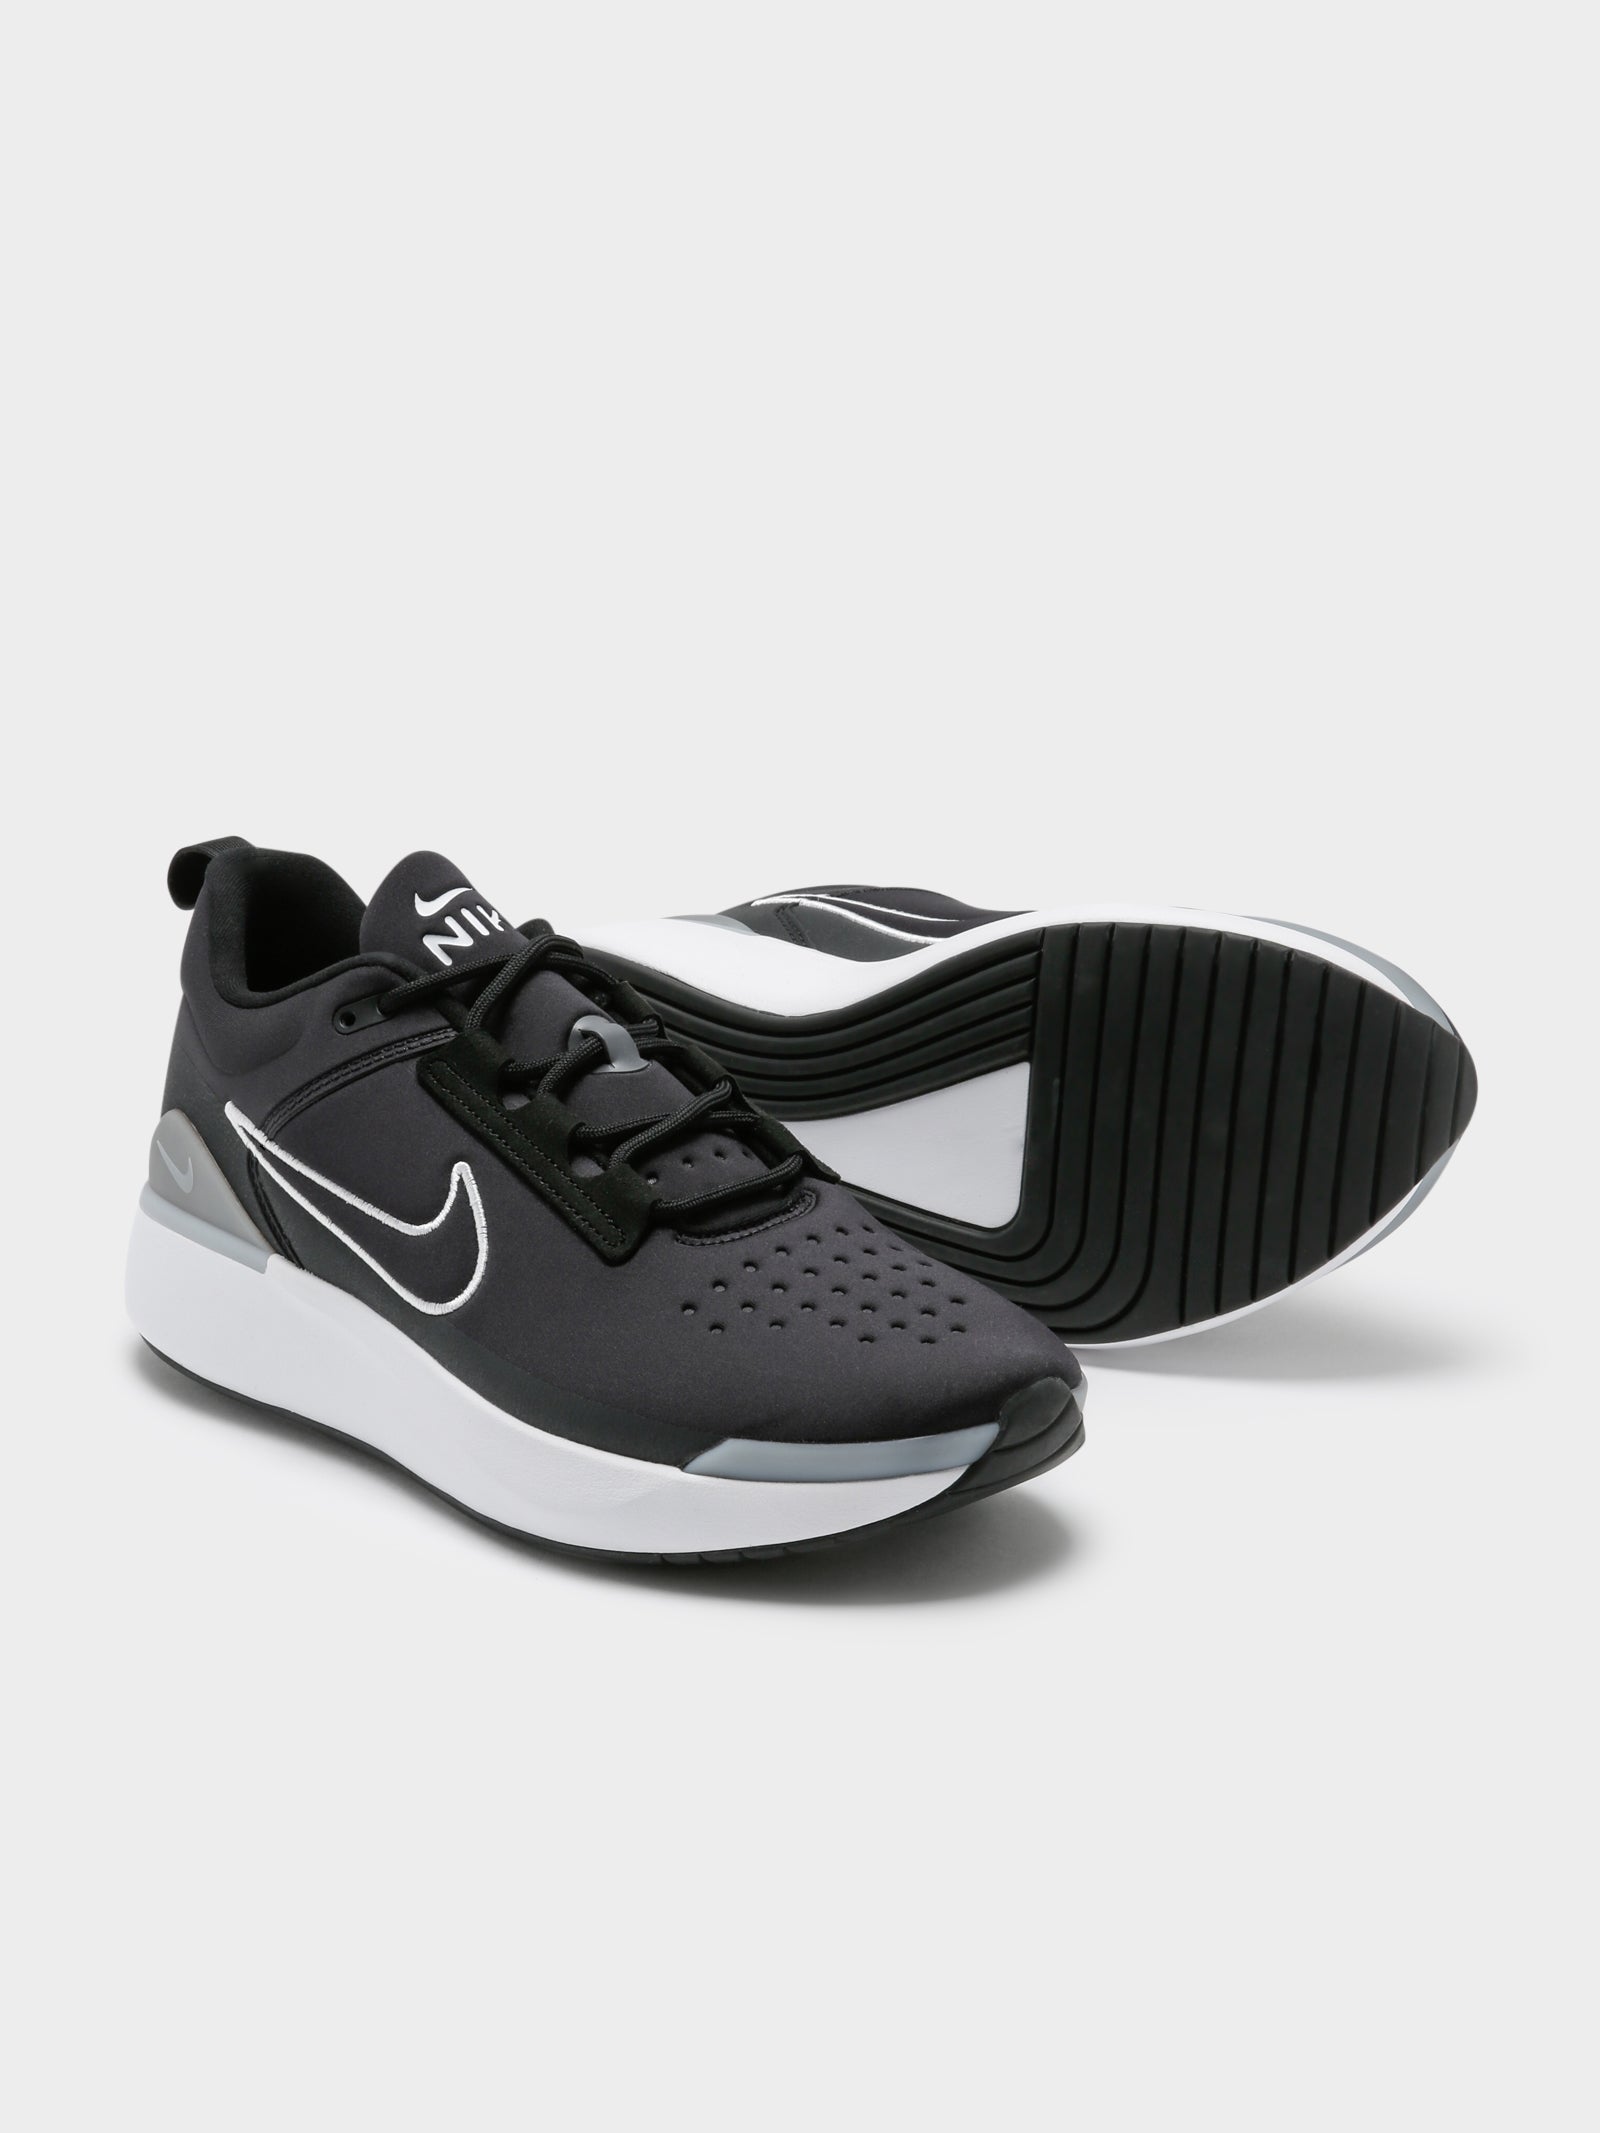 Mens E-Series 1.0 Sneakers in Black & White